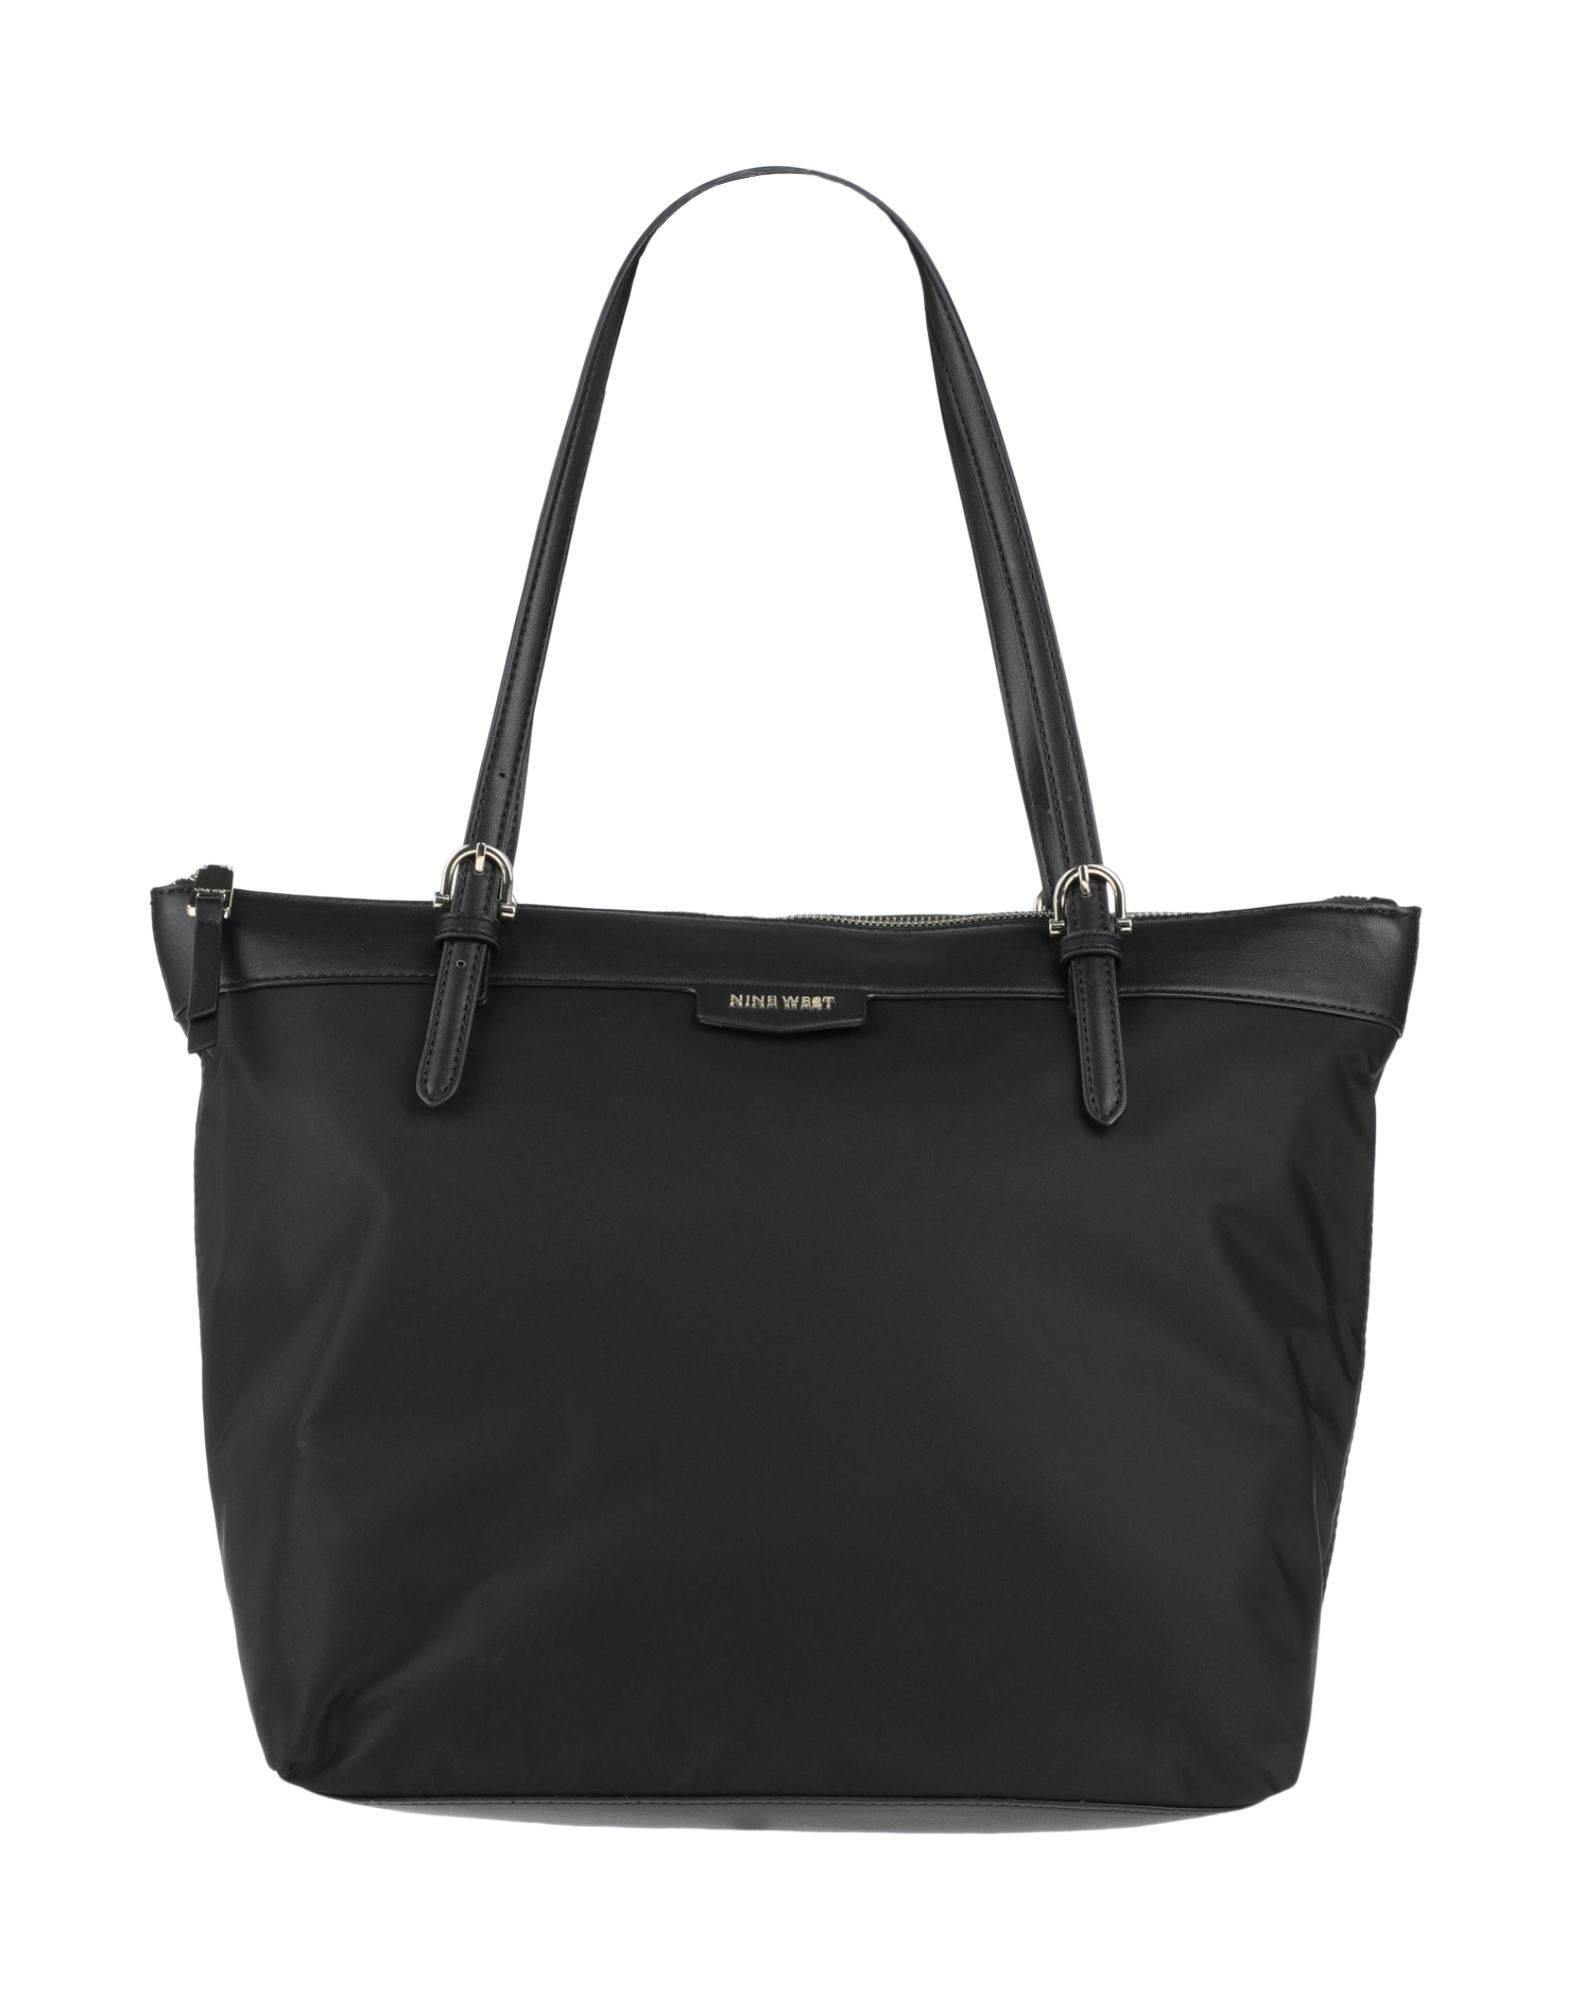 Nine West Handbags In Black | ModeSens